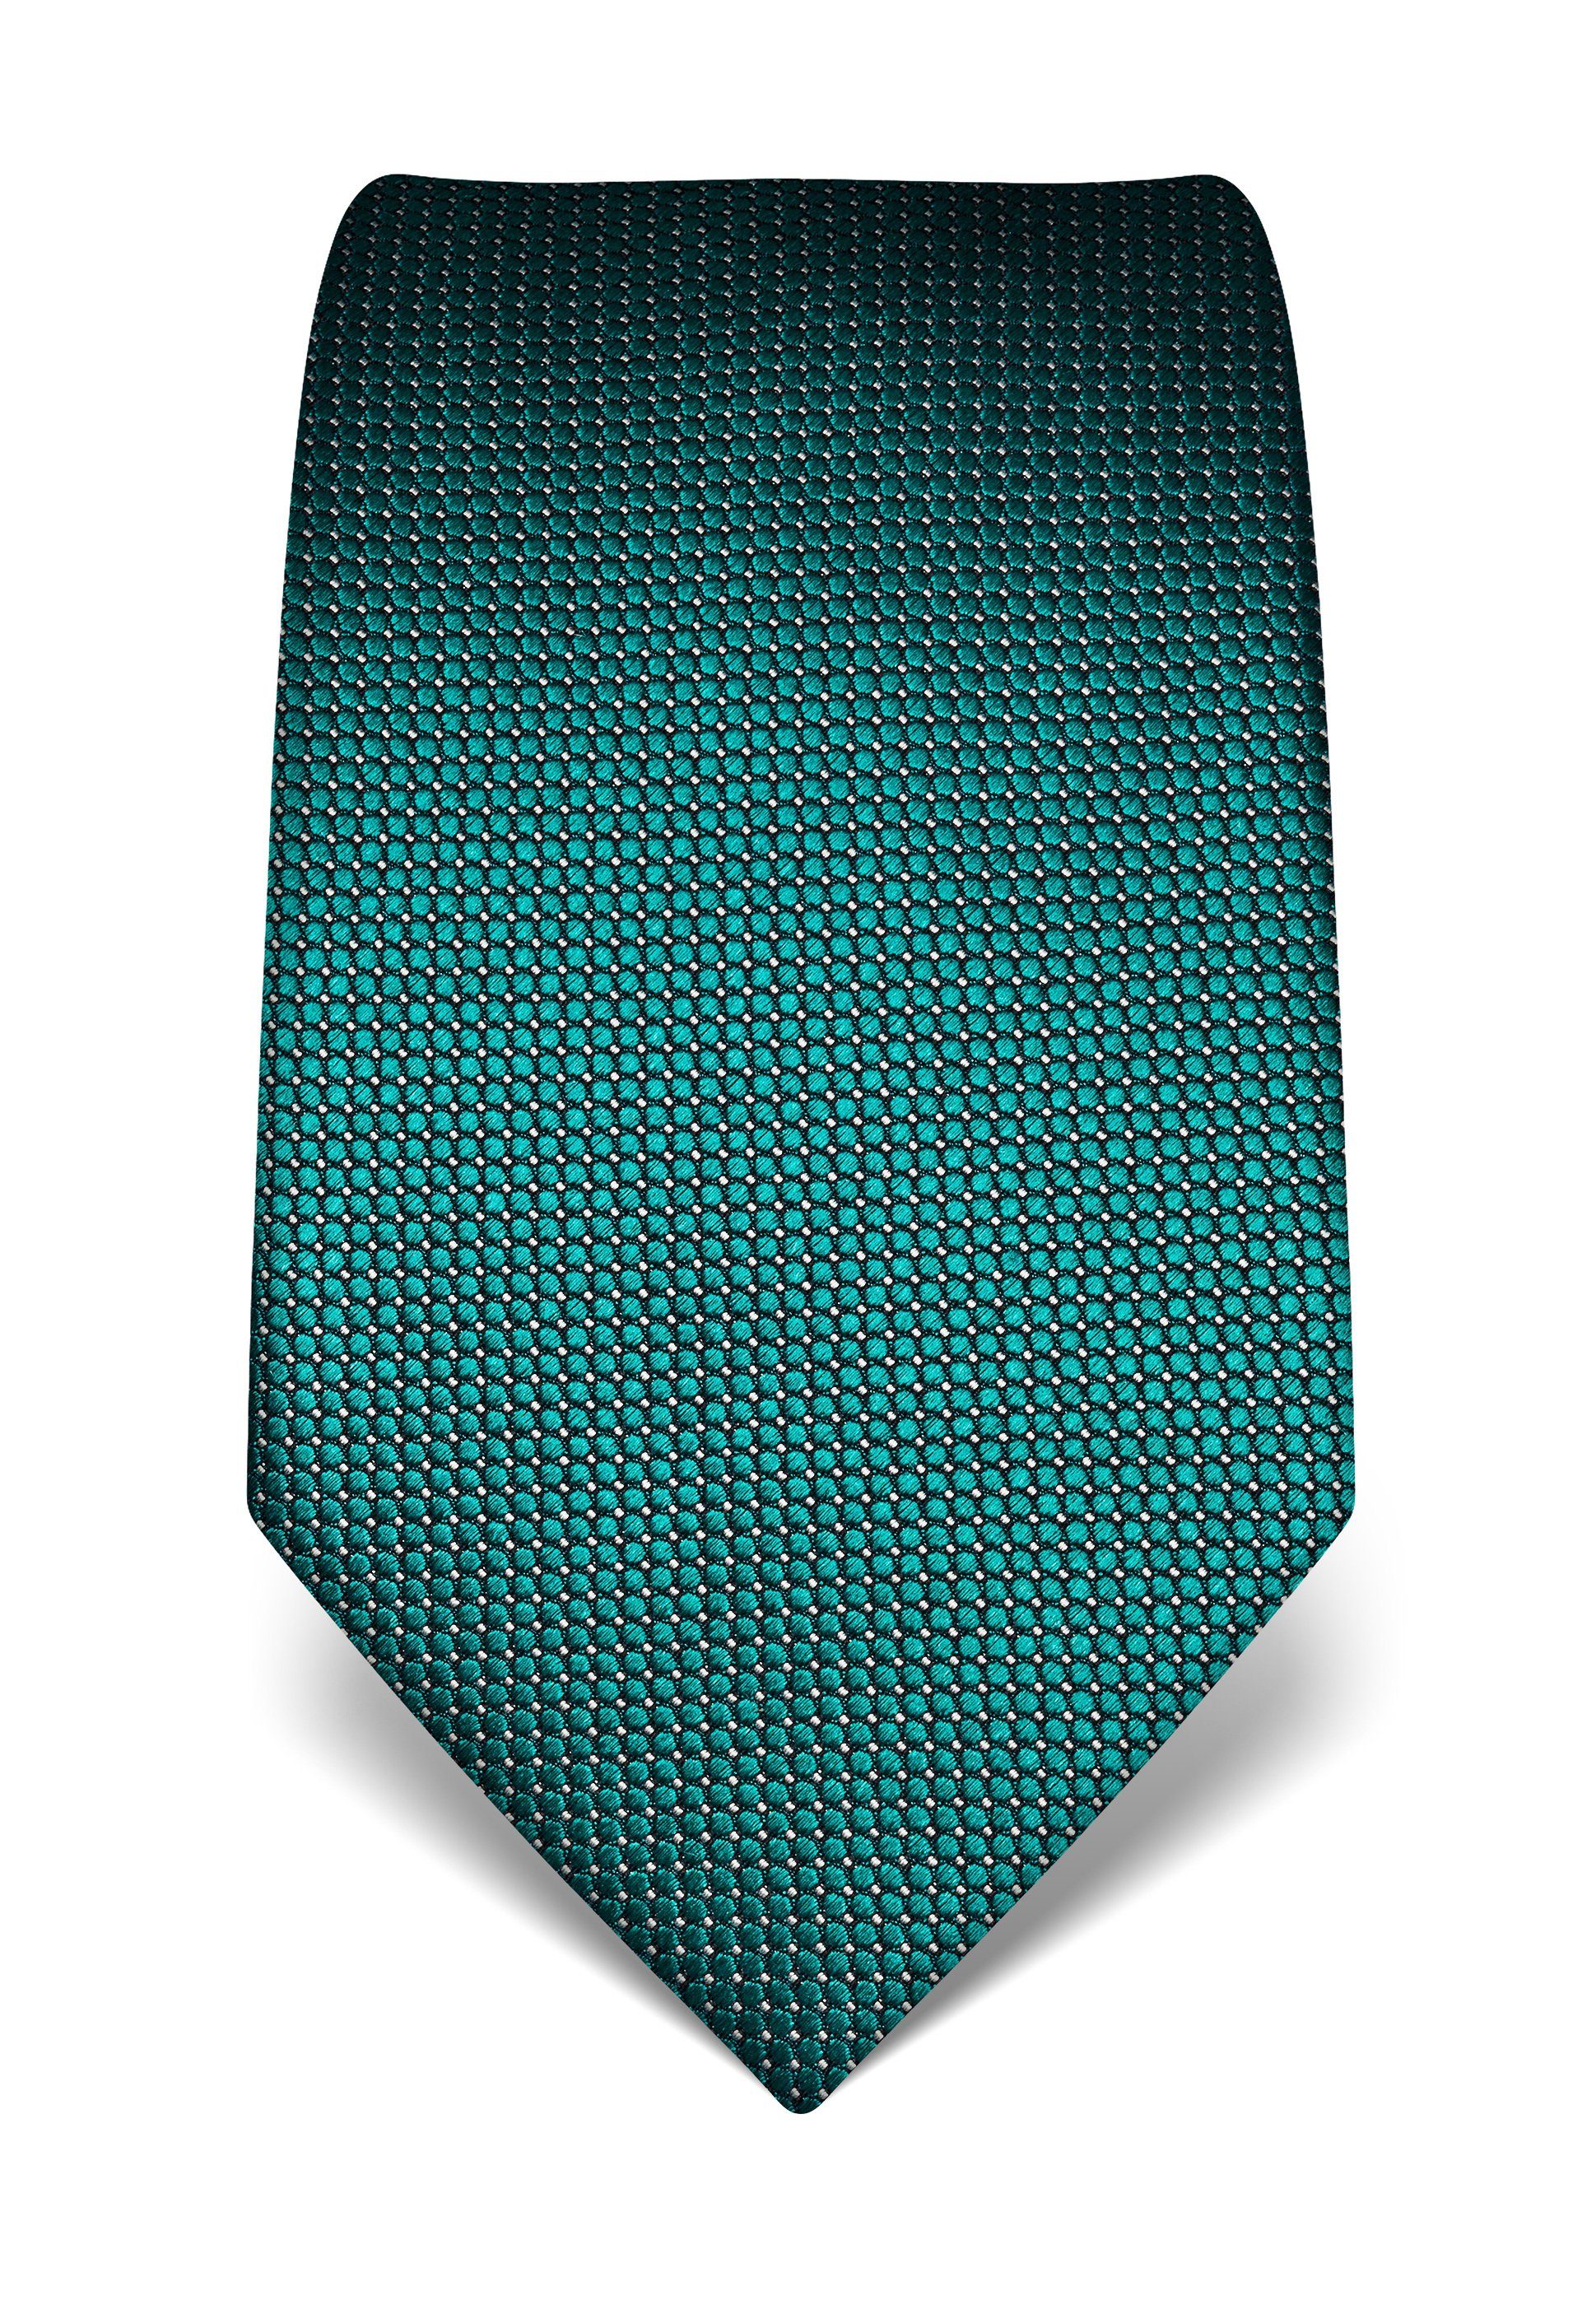 Vincenzo Boretti Krawatte gepunktet smaragd